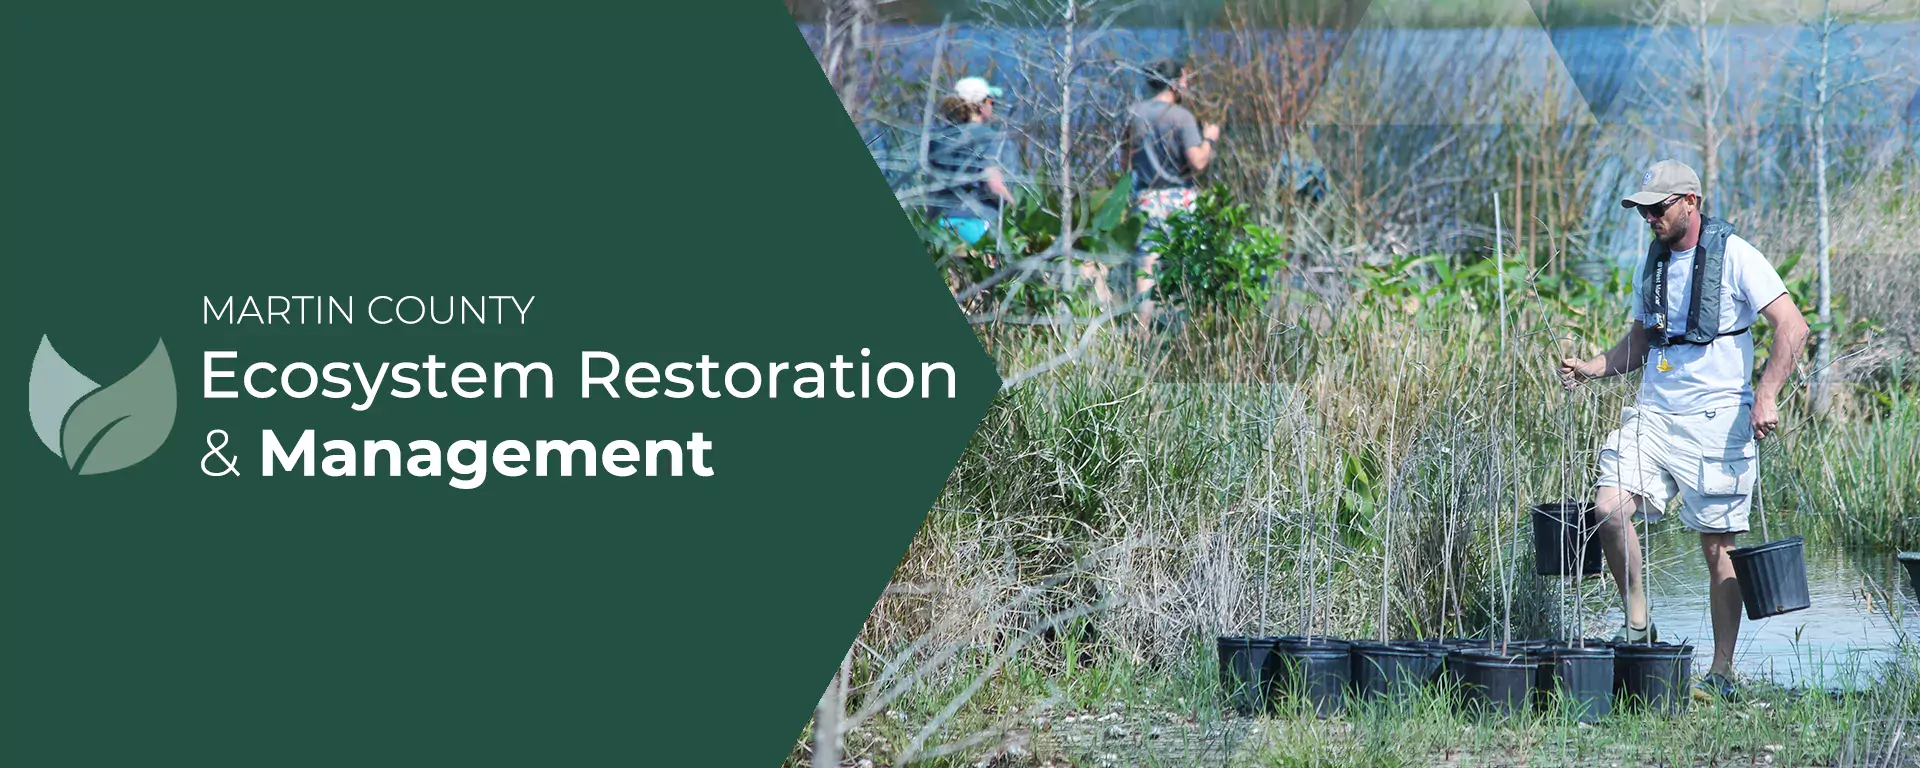 Martin County Ecosystem Restoration and Management